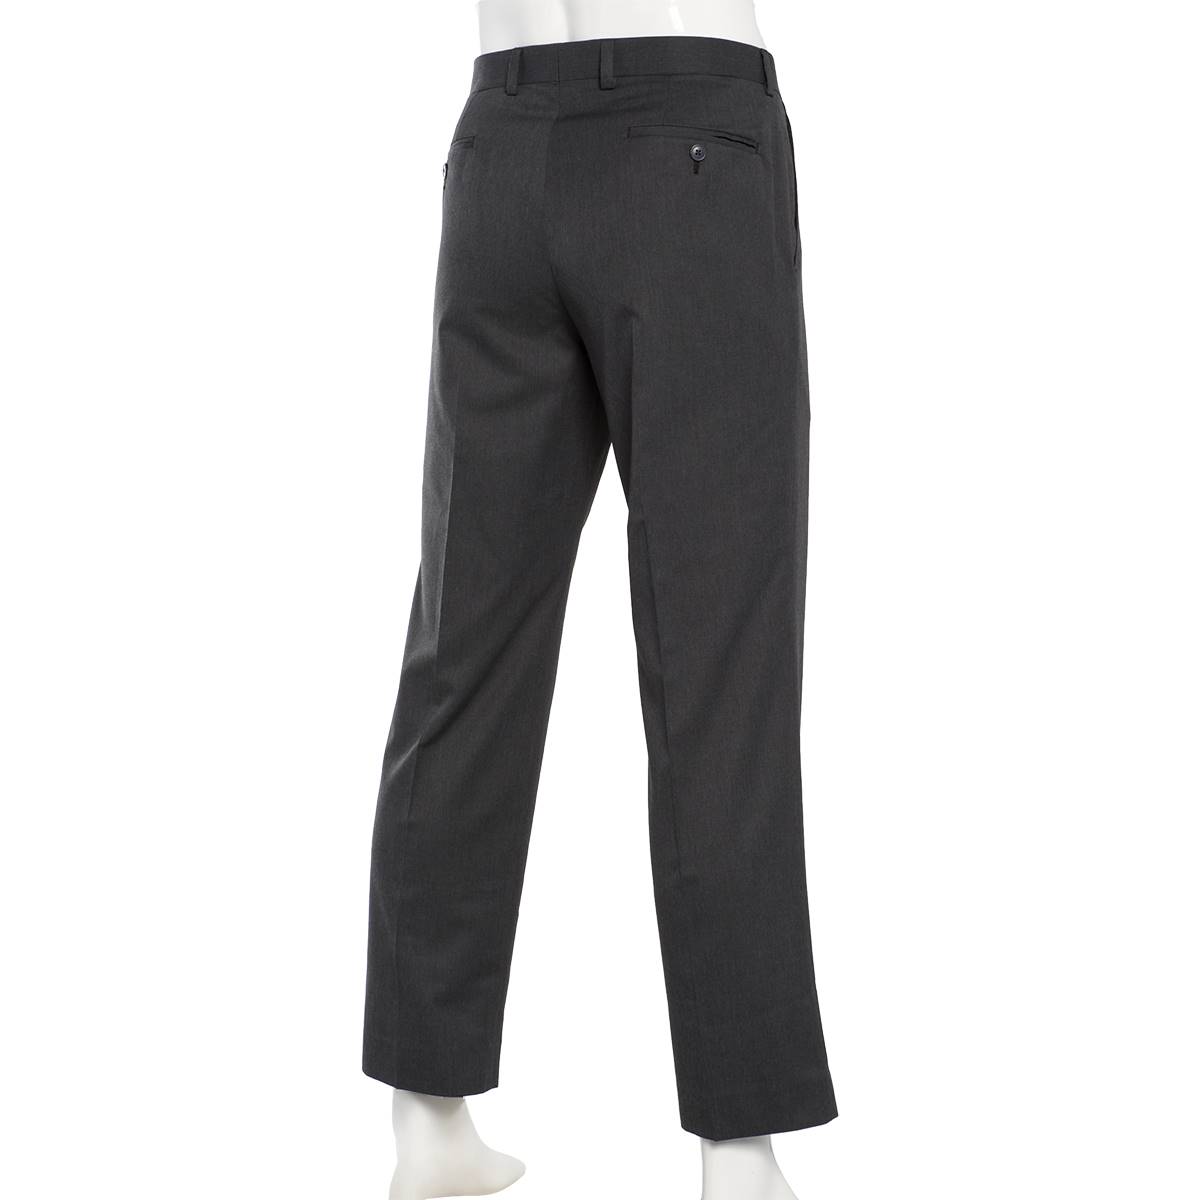 Mens Van Heusen(R) Pants - Medium Grey